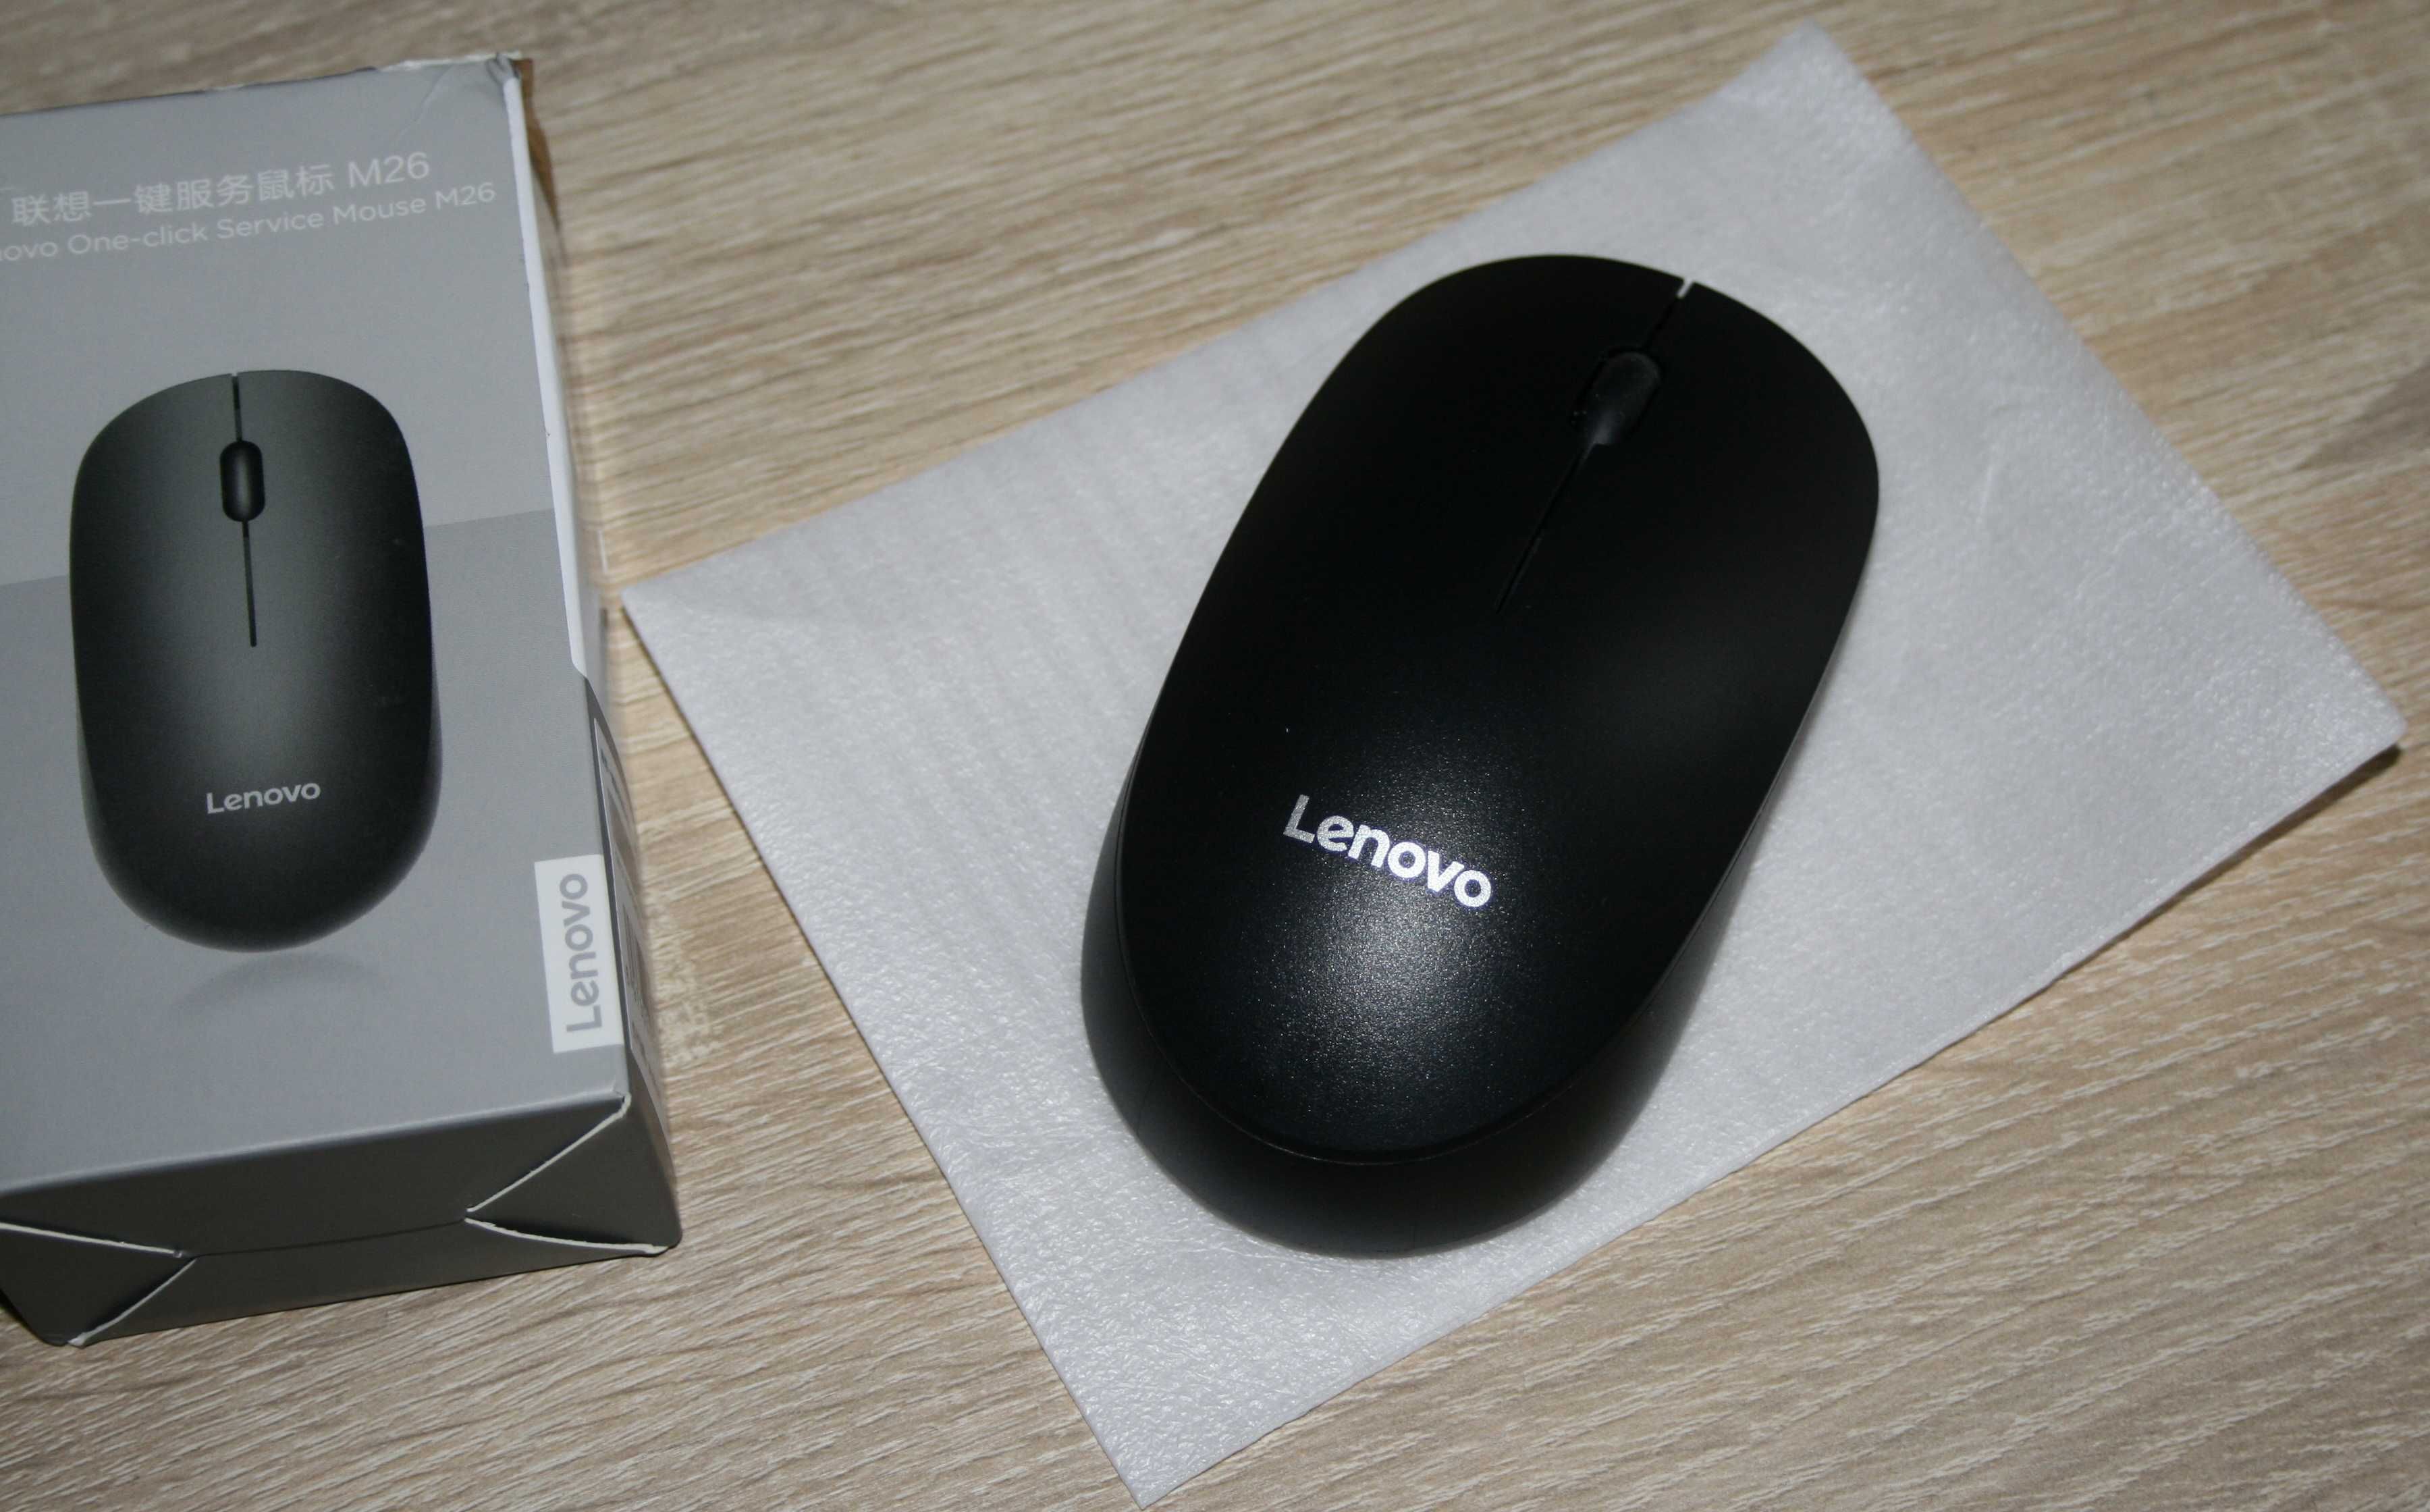 myszka bezprzewodowa Lenovo 1000 DPI